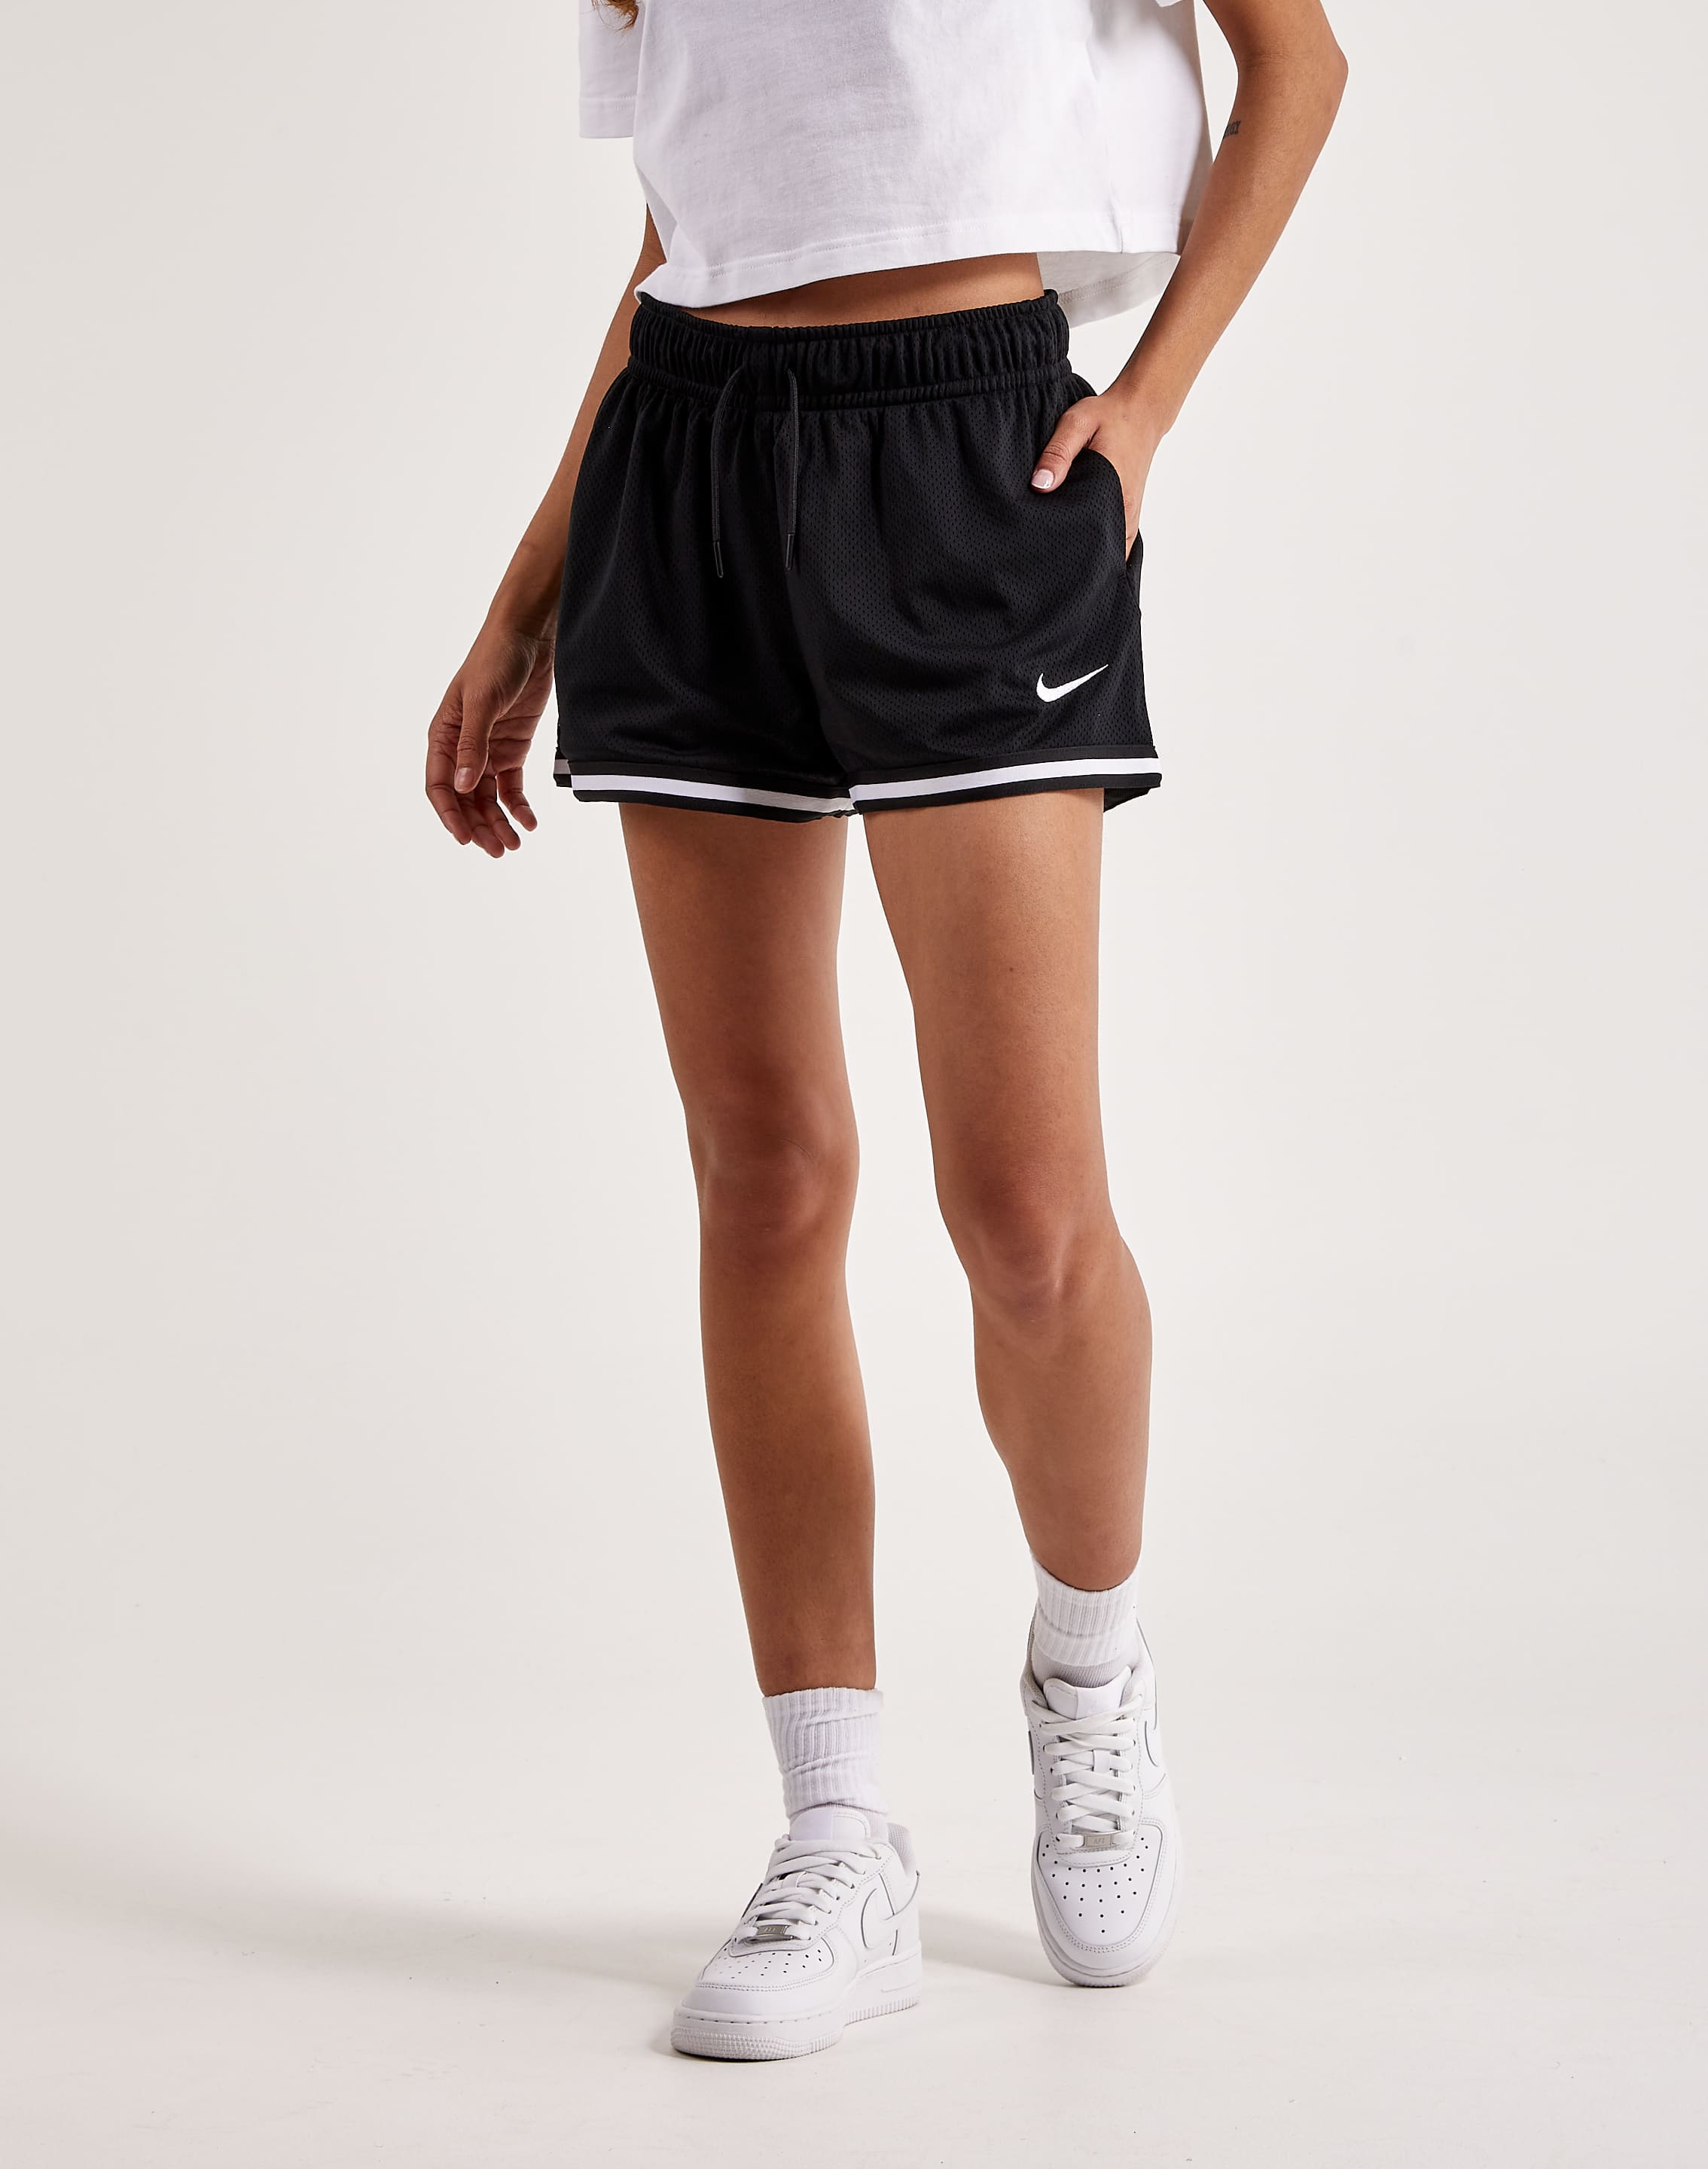 DTLR – Essentials Nike Mesh Shorts